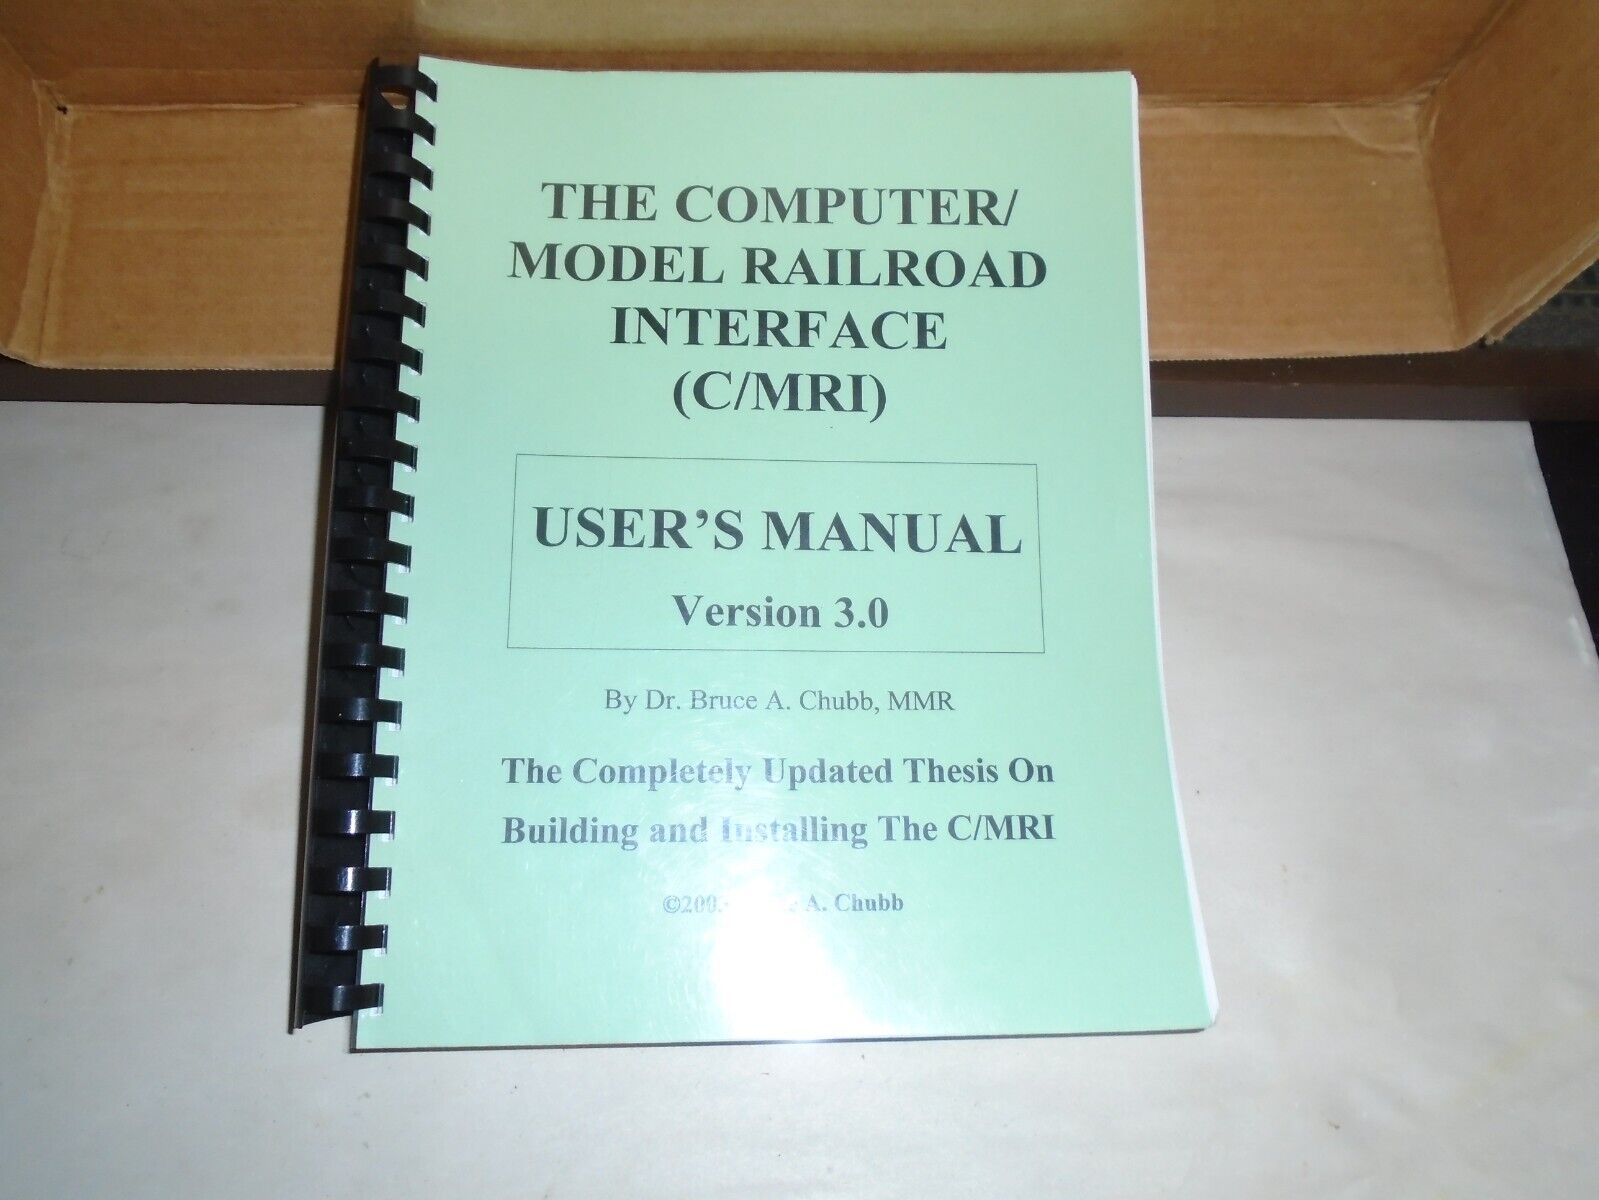 THE COMPUTER / MODEL RAILROAD INERFACE (C/MRI) USERS MANUAL VERSION 3.0